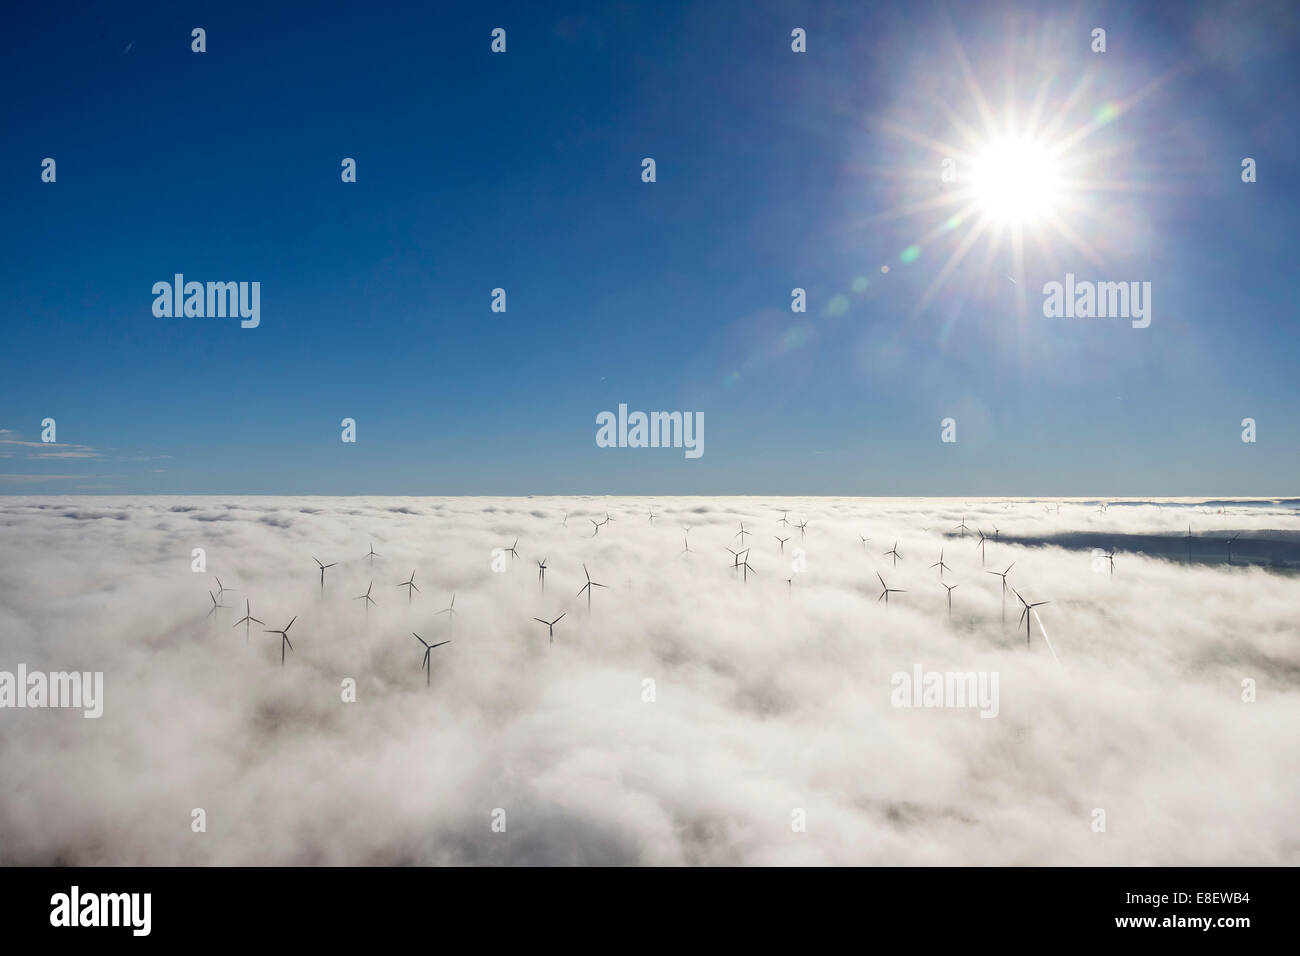 Wind turbines covered by low clouds, blue sky, aerial view, Marsberg, Sauerland region, North Rhine-Westphalia, Germany Stock Photo